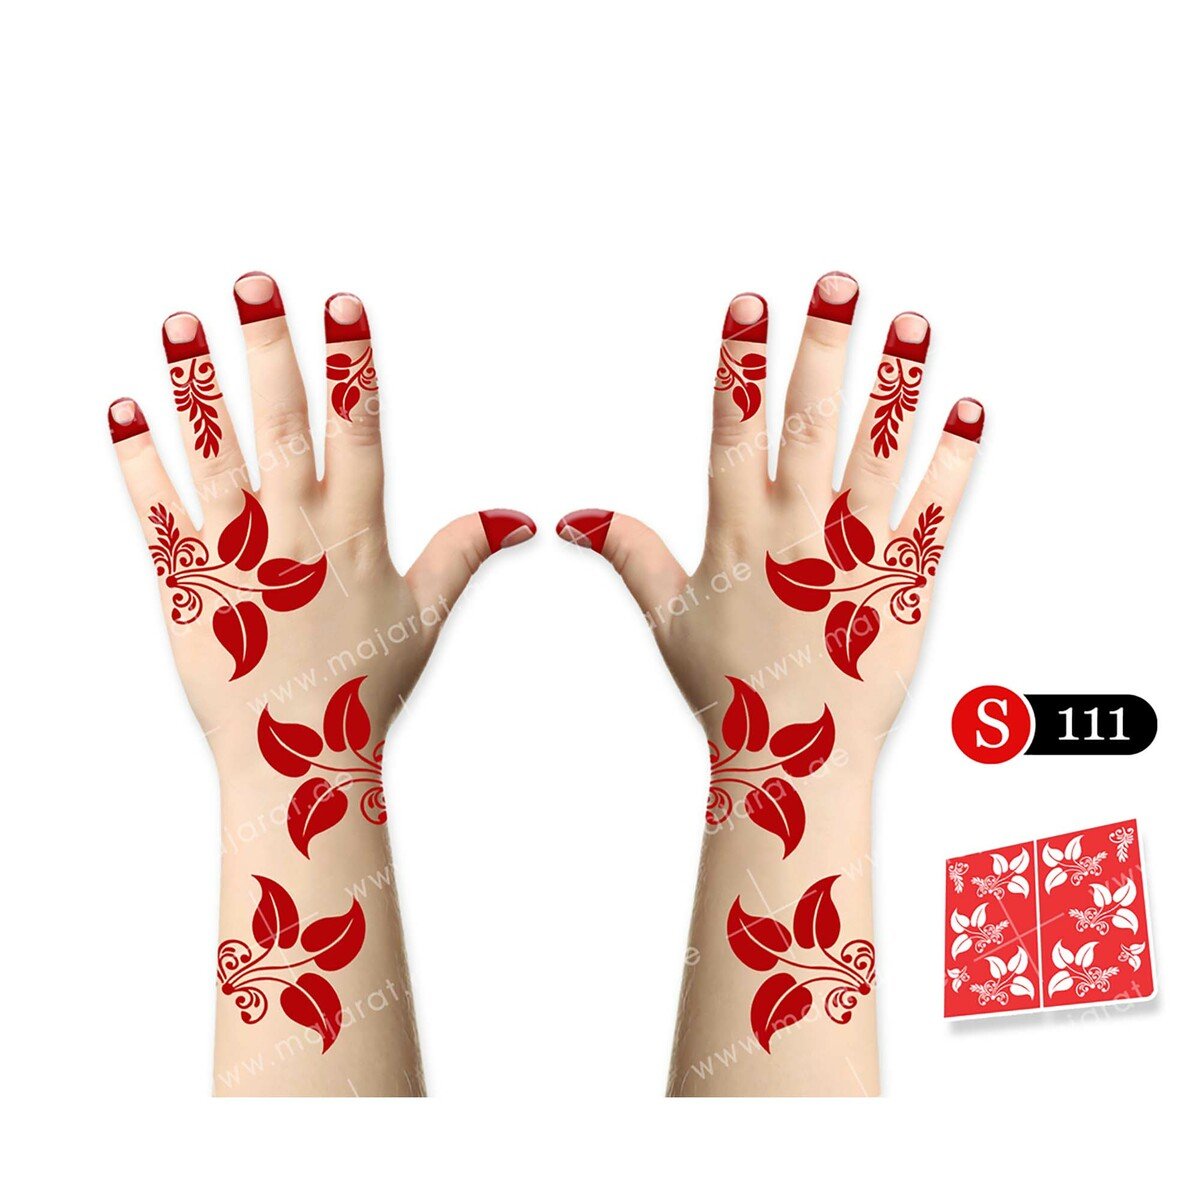 Majarat Henna Design Sticker Small S111 18x15cm